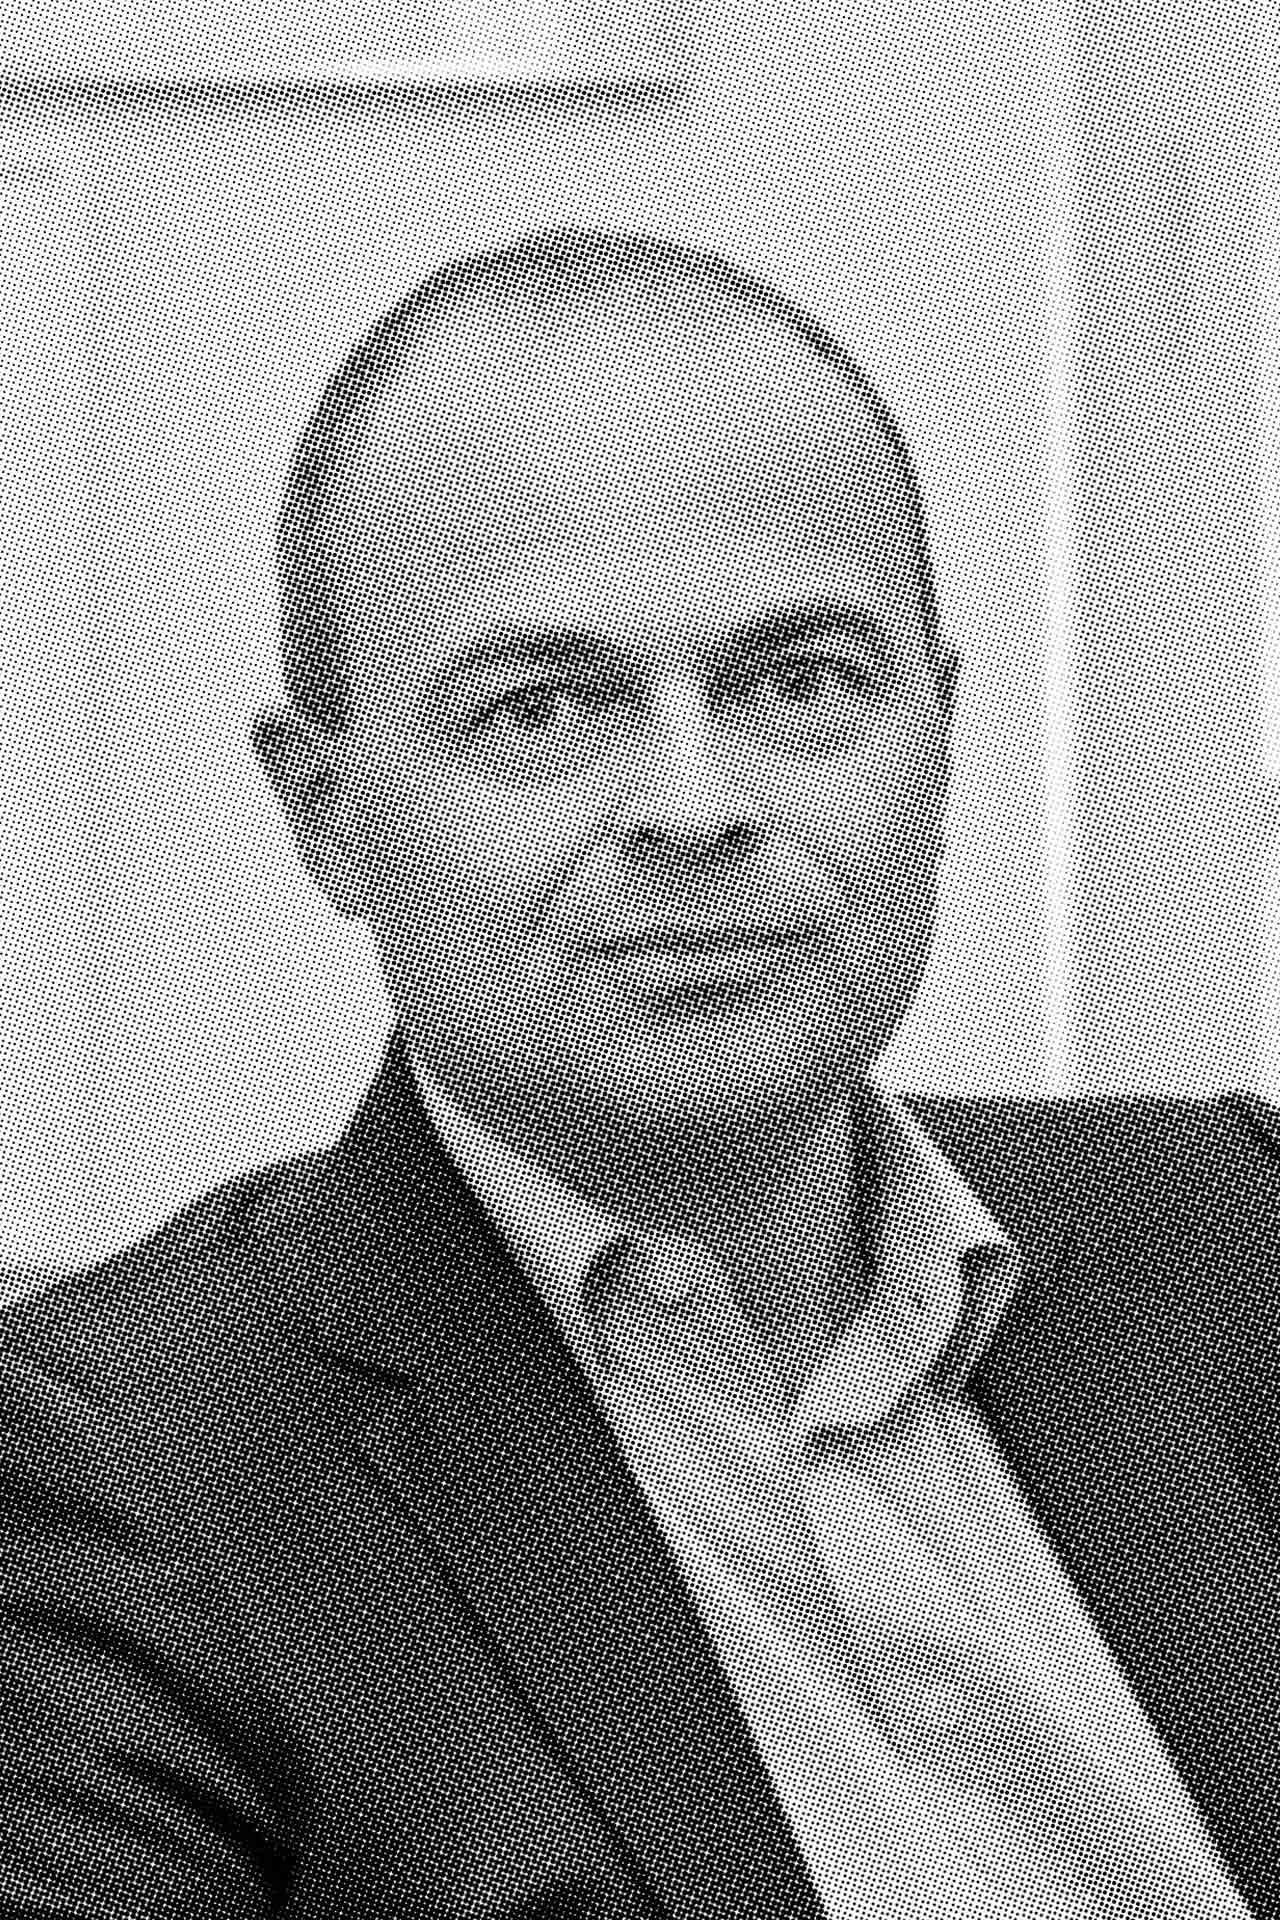 Prof. Dr. phil. Stephan Trüby